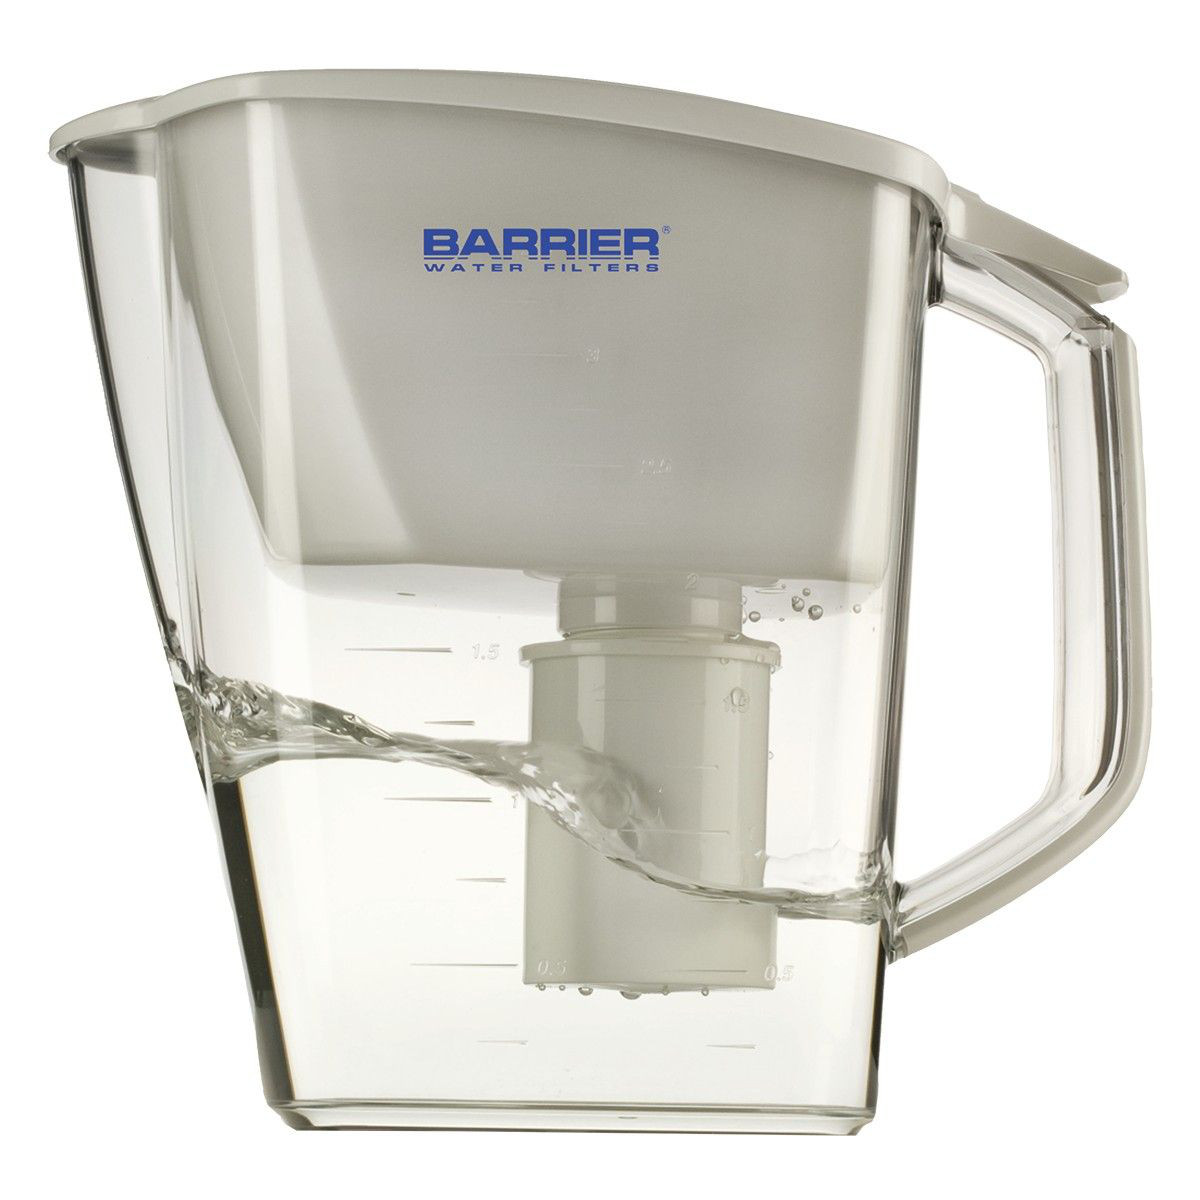  Cana filtrare apa Barrier Grand Timer 103-AL, 3.6 l, Alb 